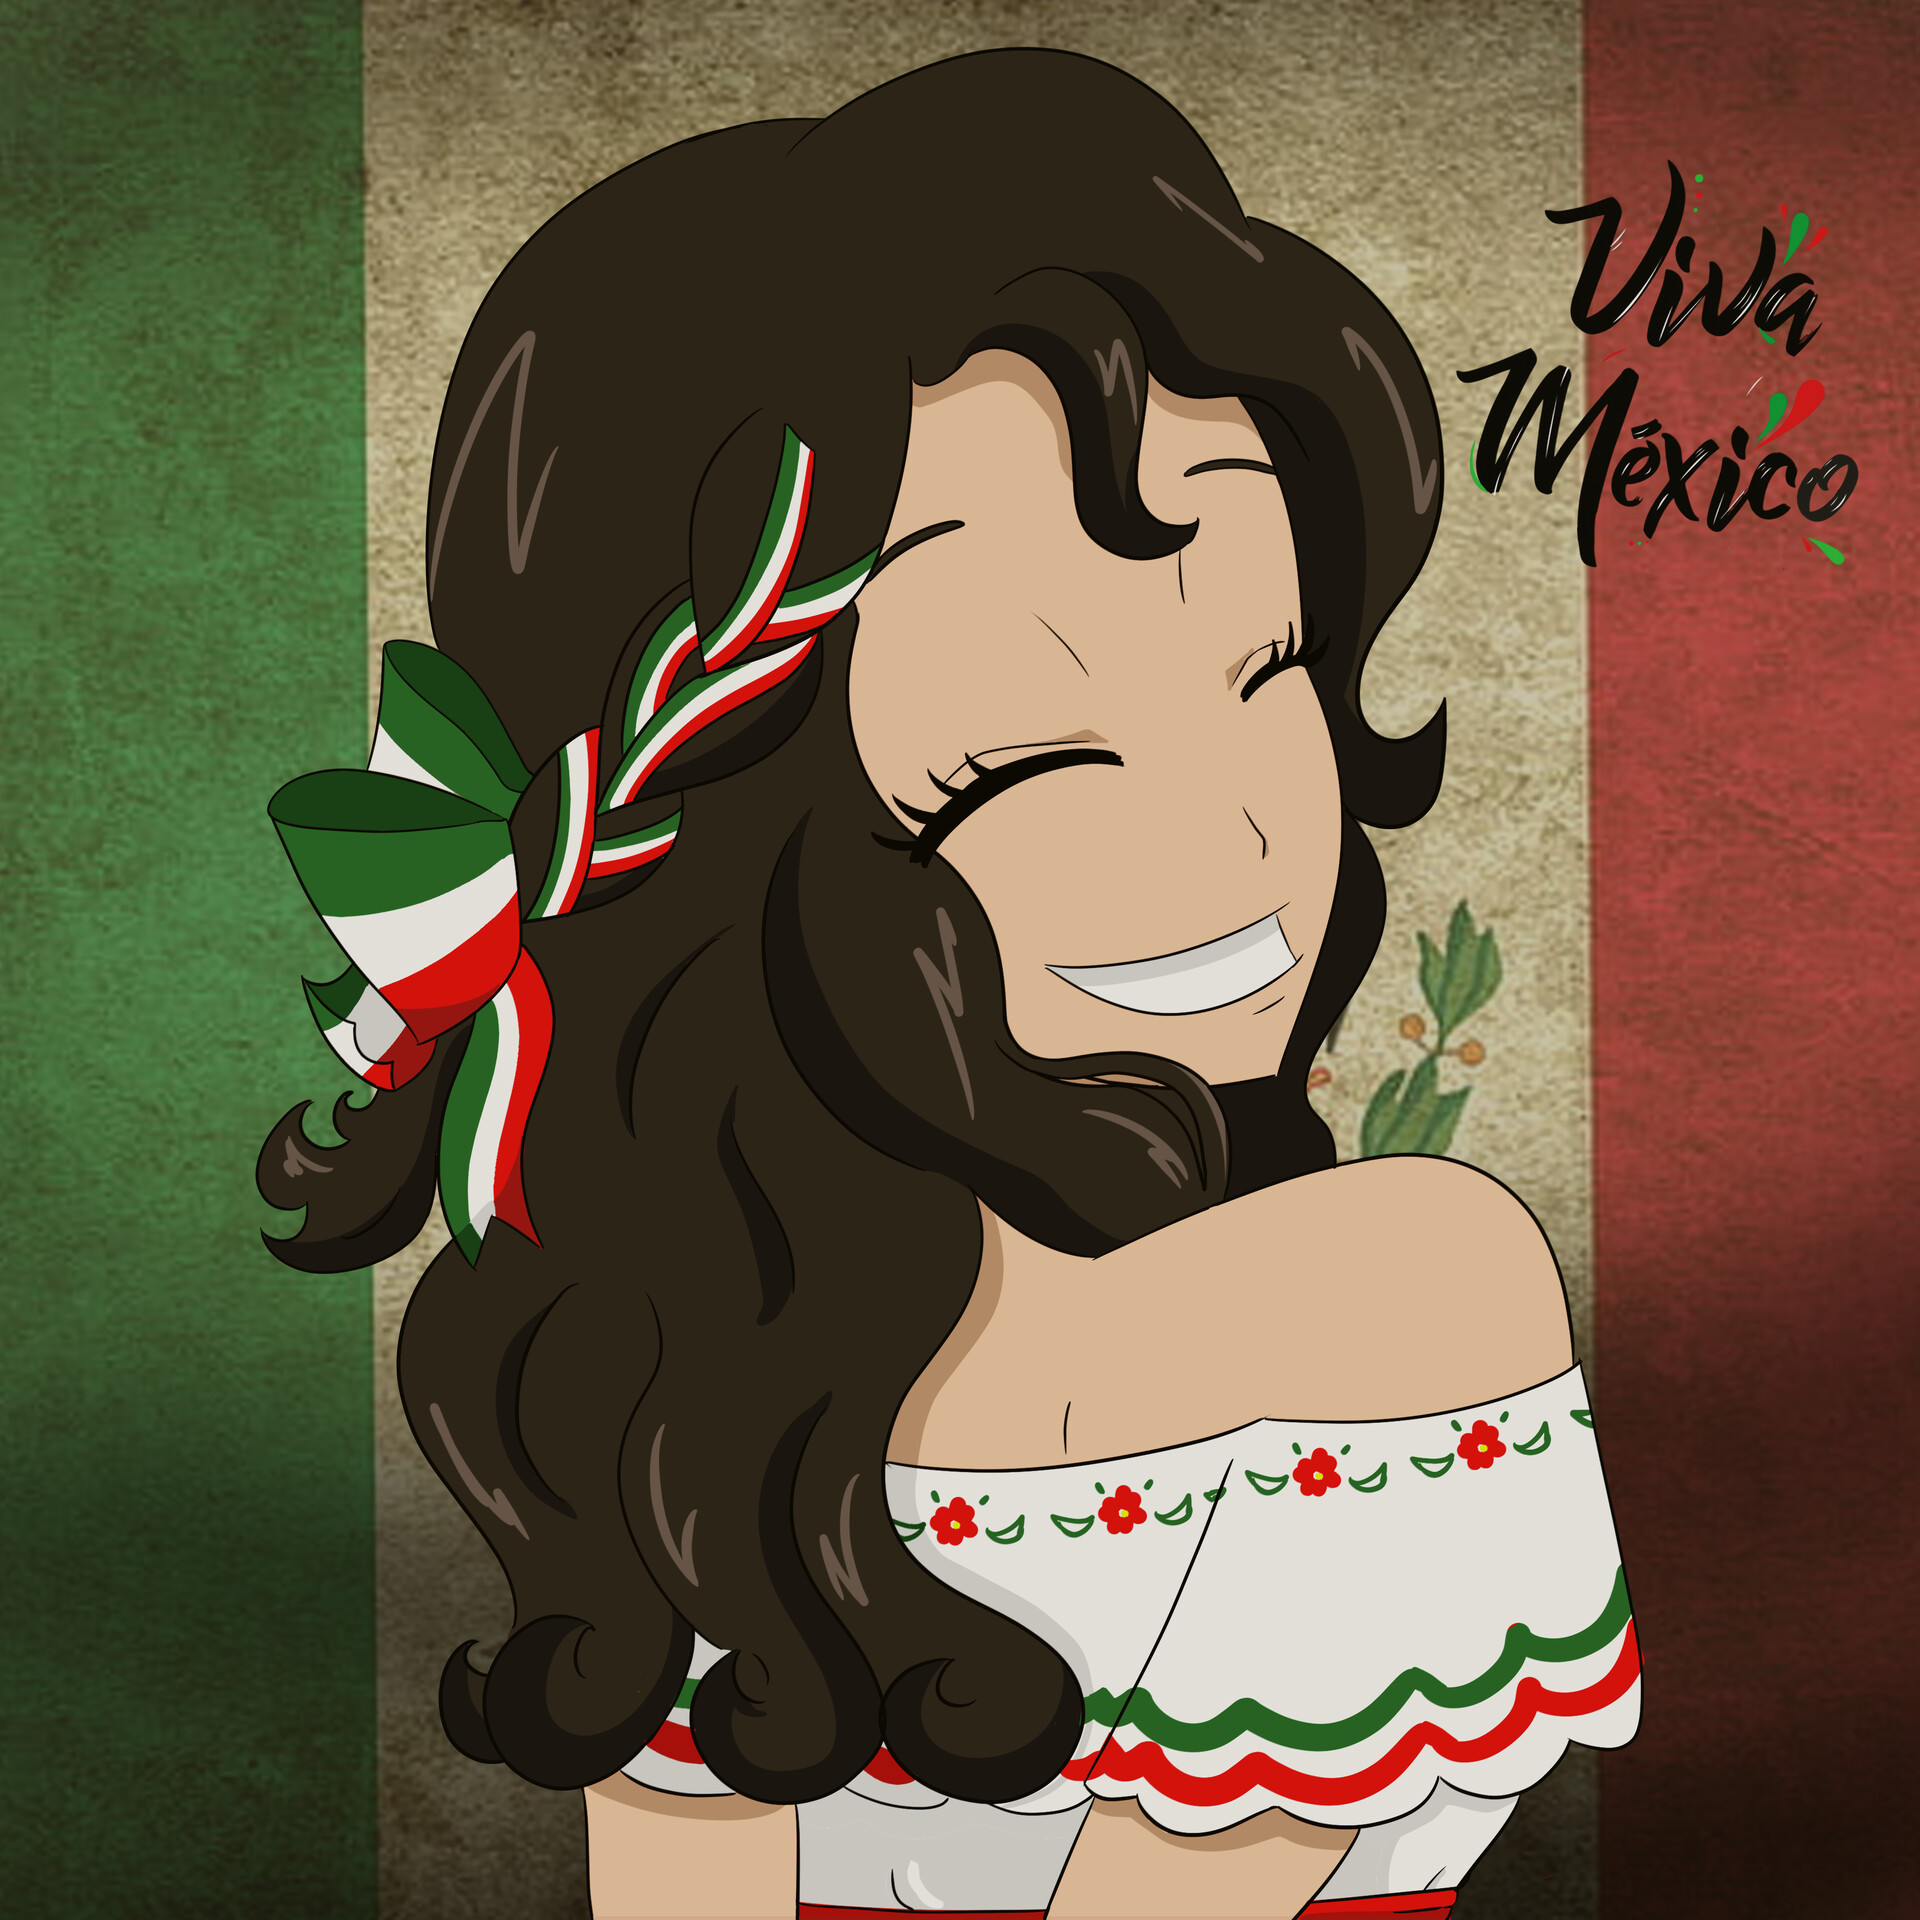 Viva Mexico by liztotodichan on DeviantArt